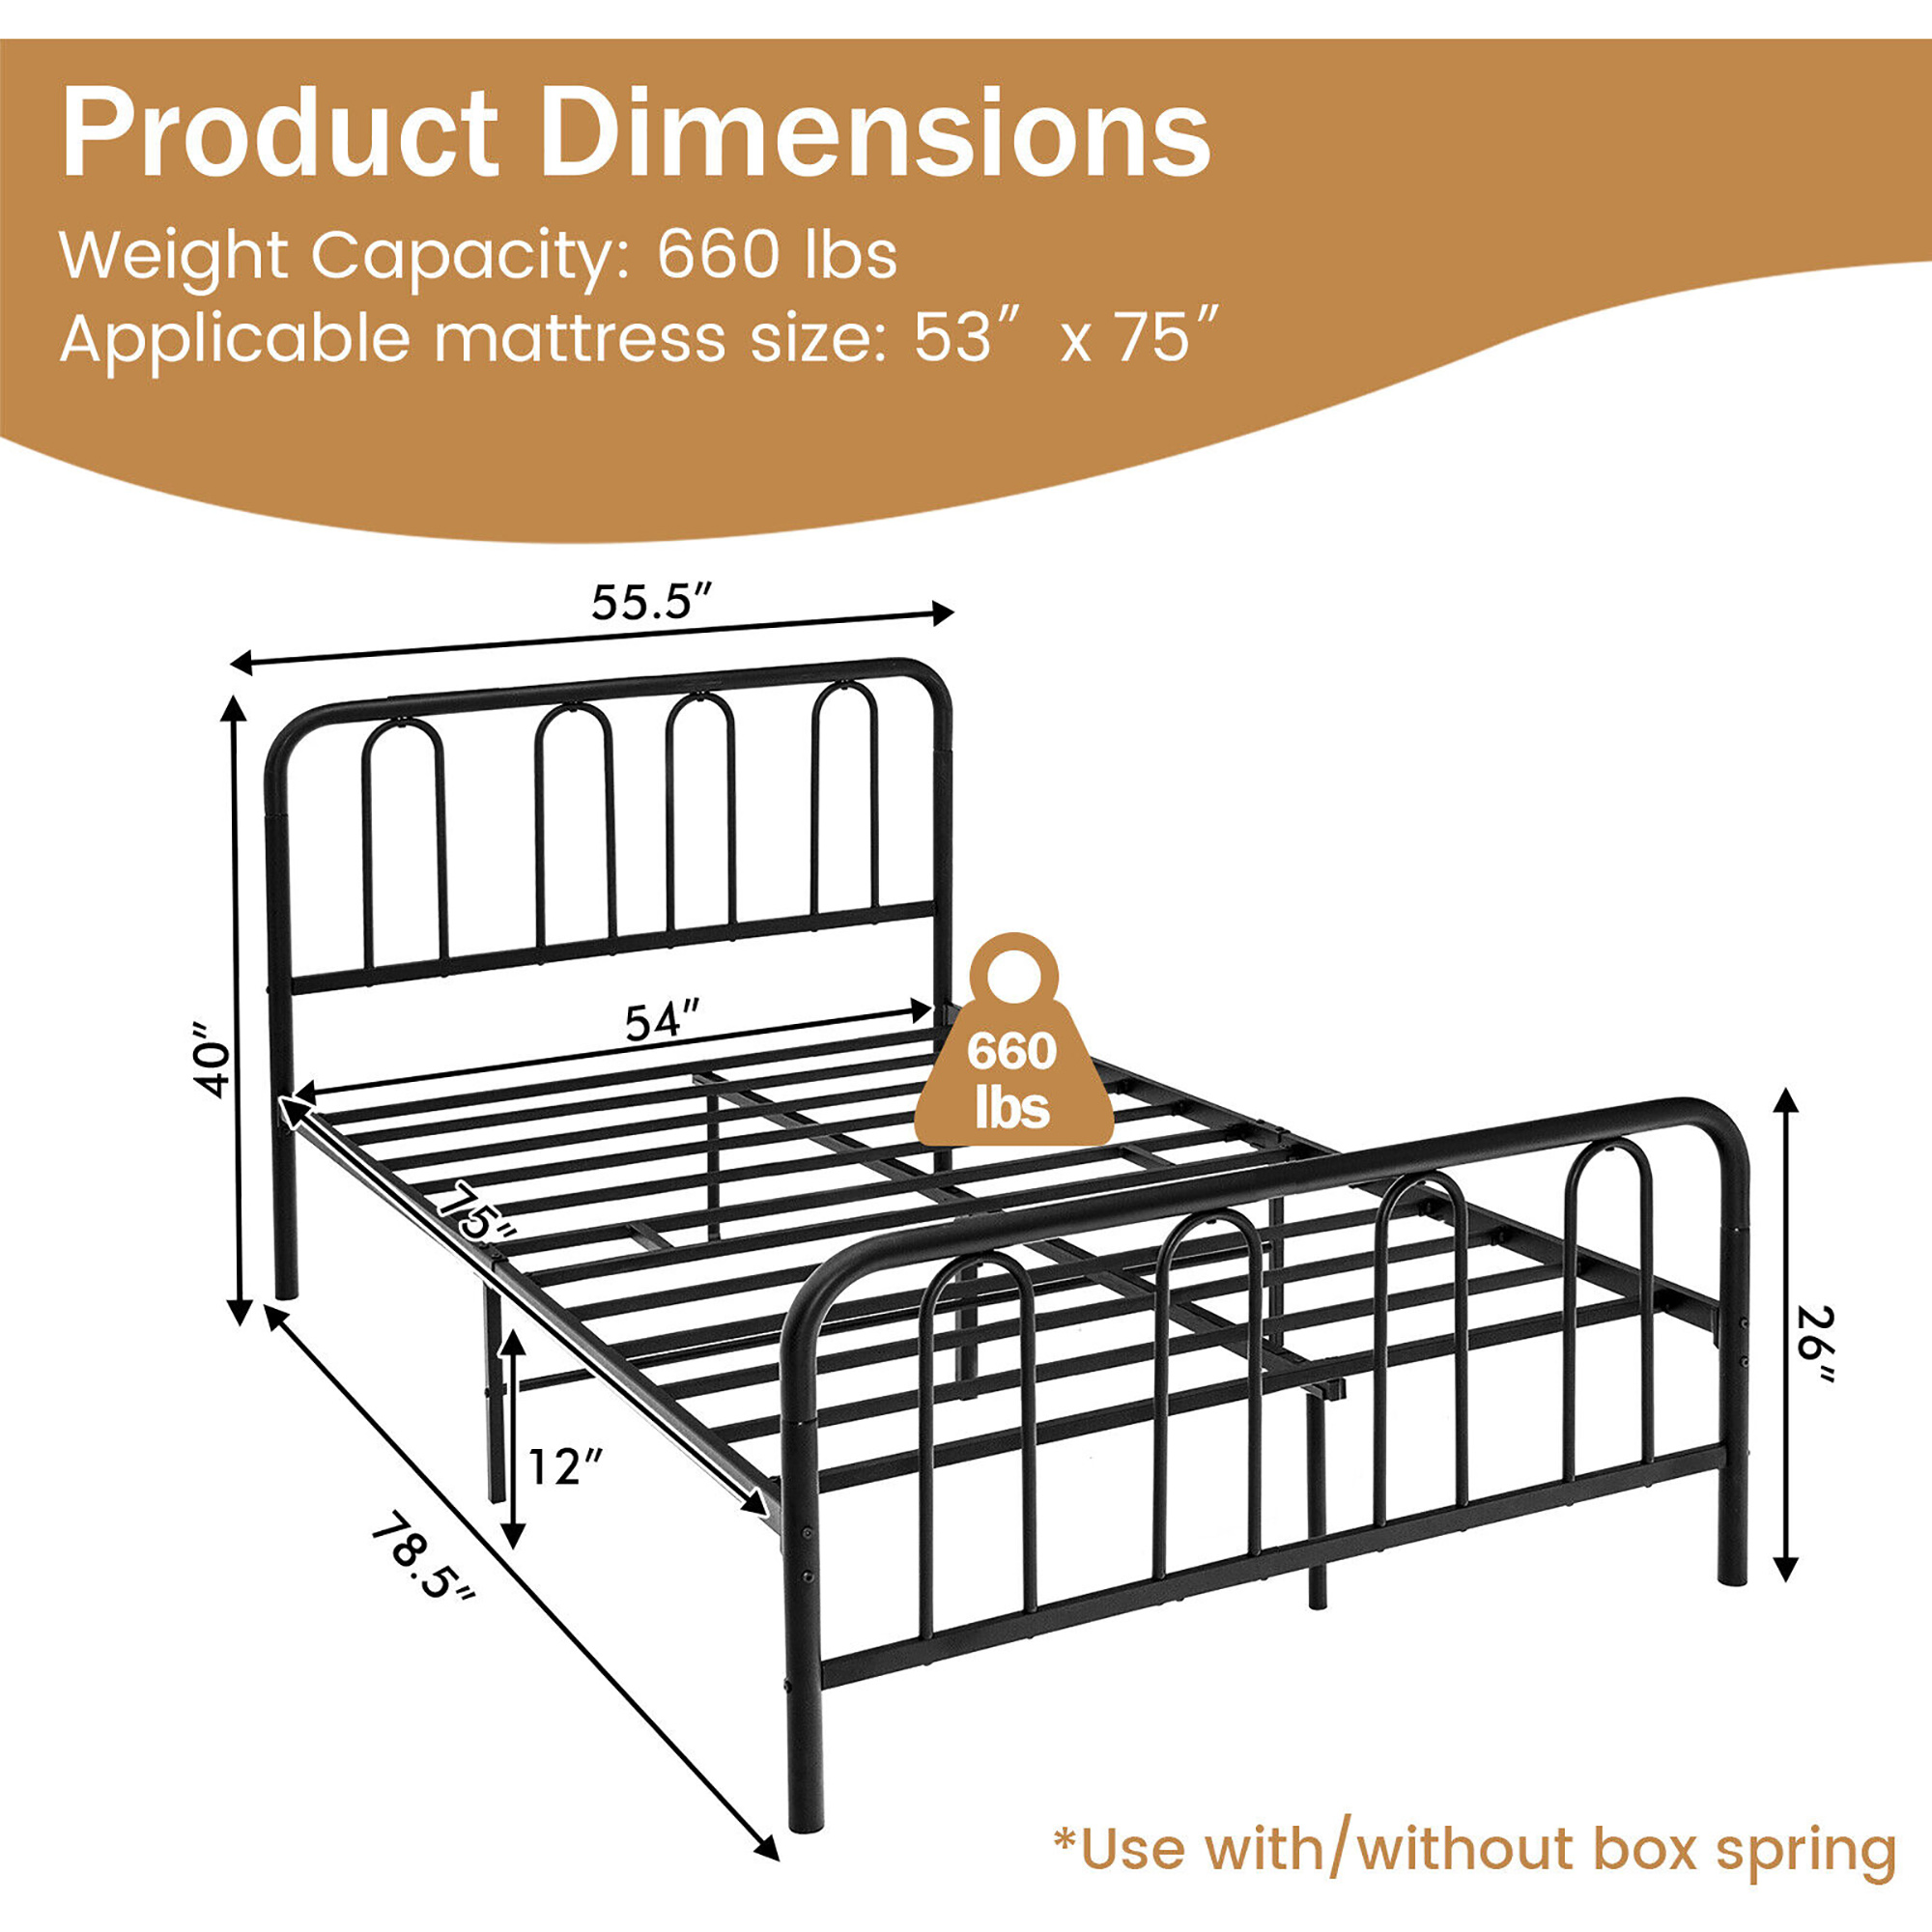 Gymax Stylish Full Size Metal Bed Frame Platform Bed Base w/ Headboard & Footboard